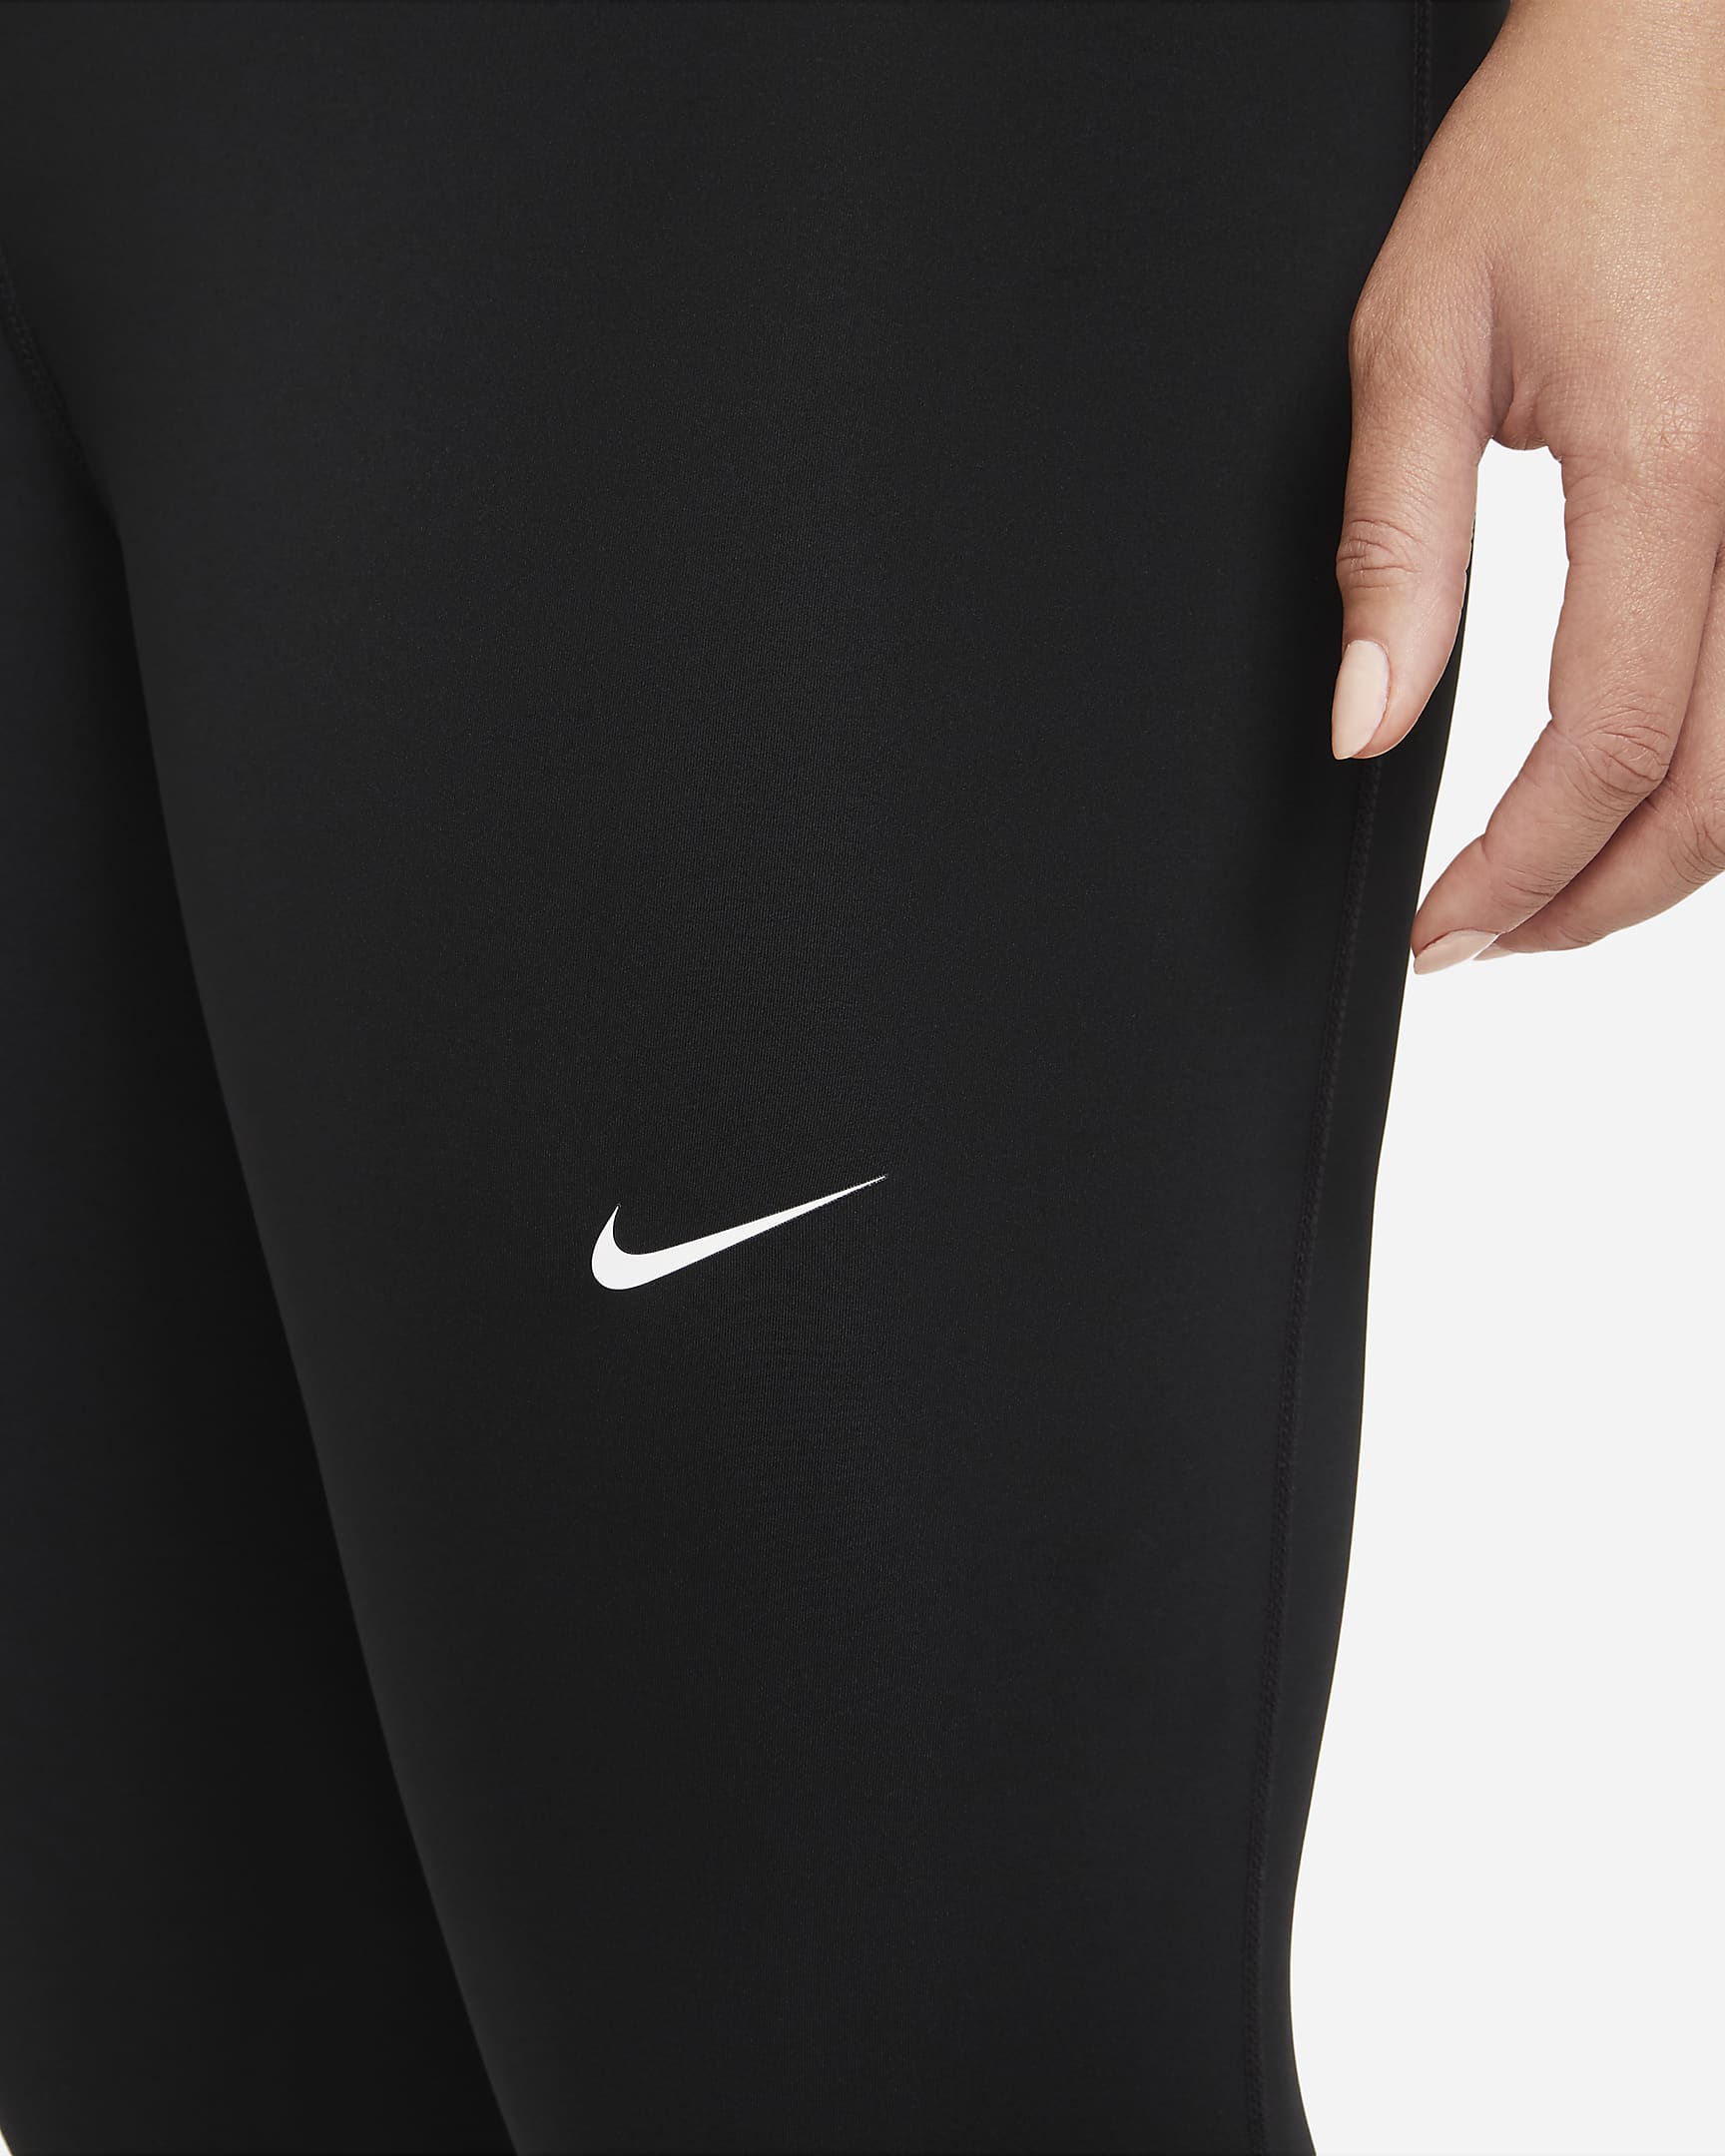 Leggings Nike Pro 365 para mulher (tamanhos Plus) - Preto/Branco